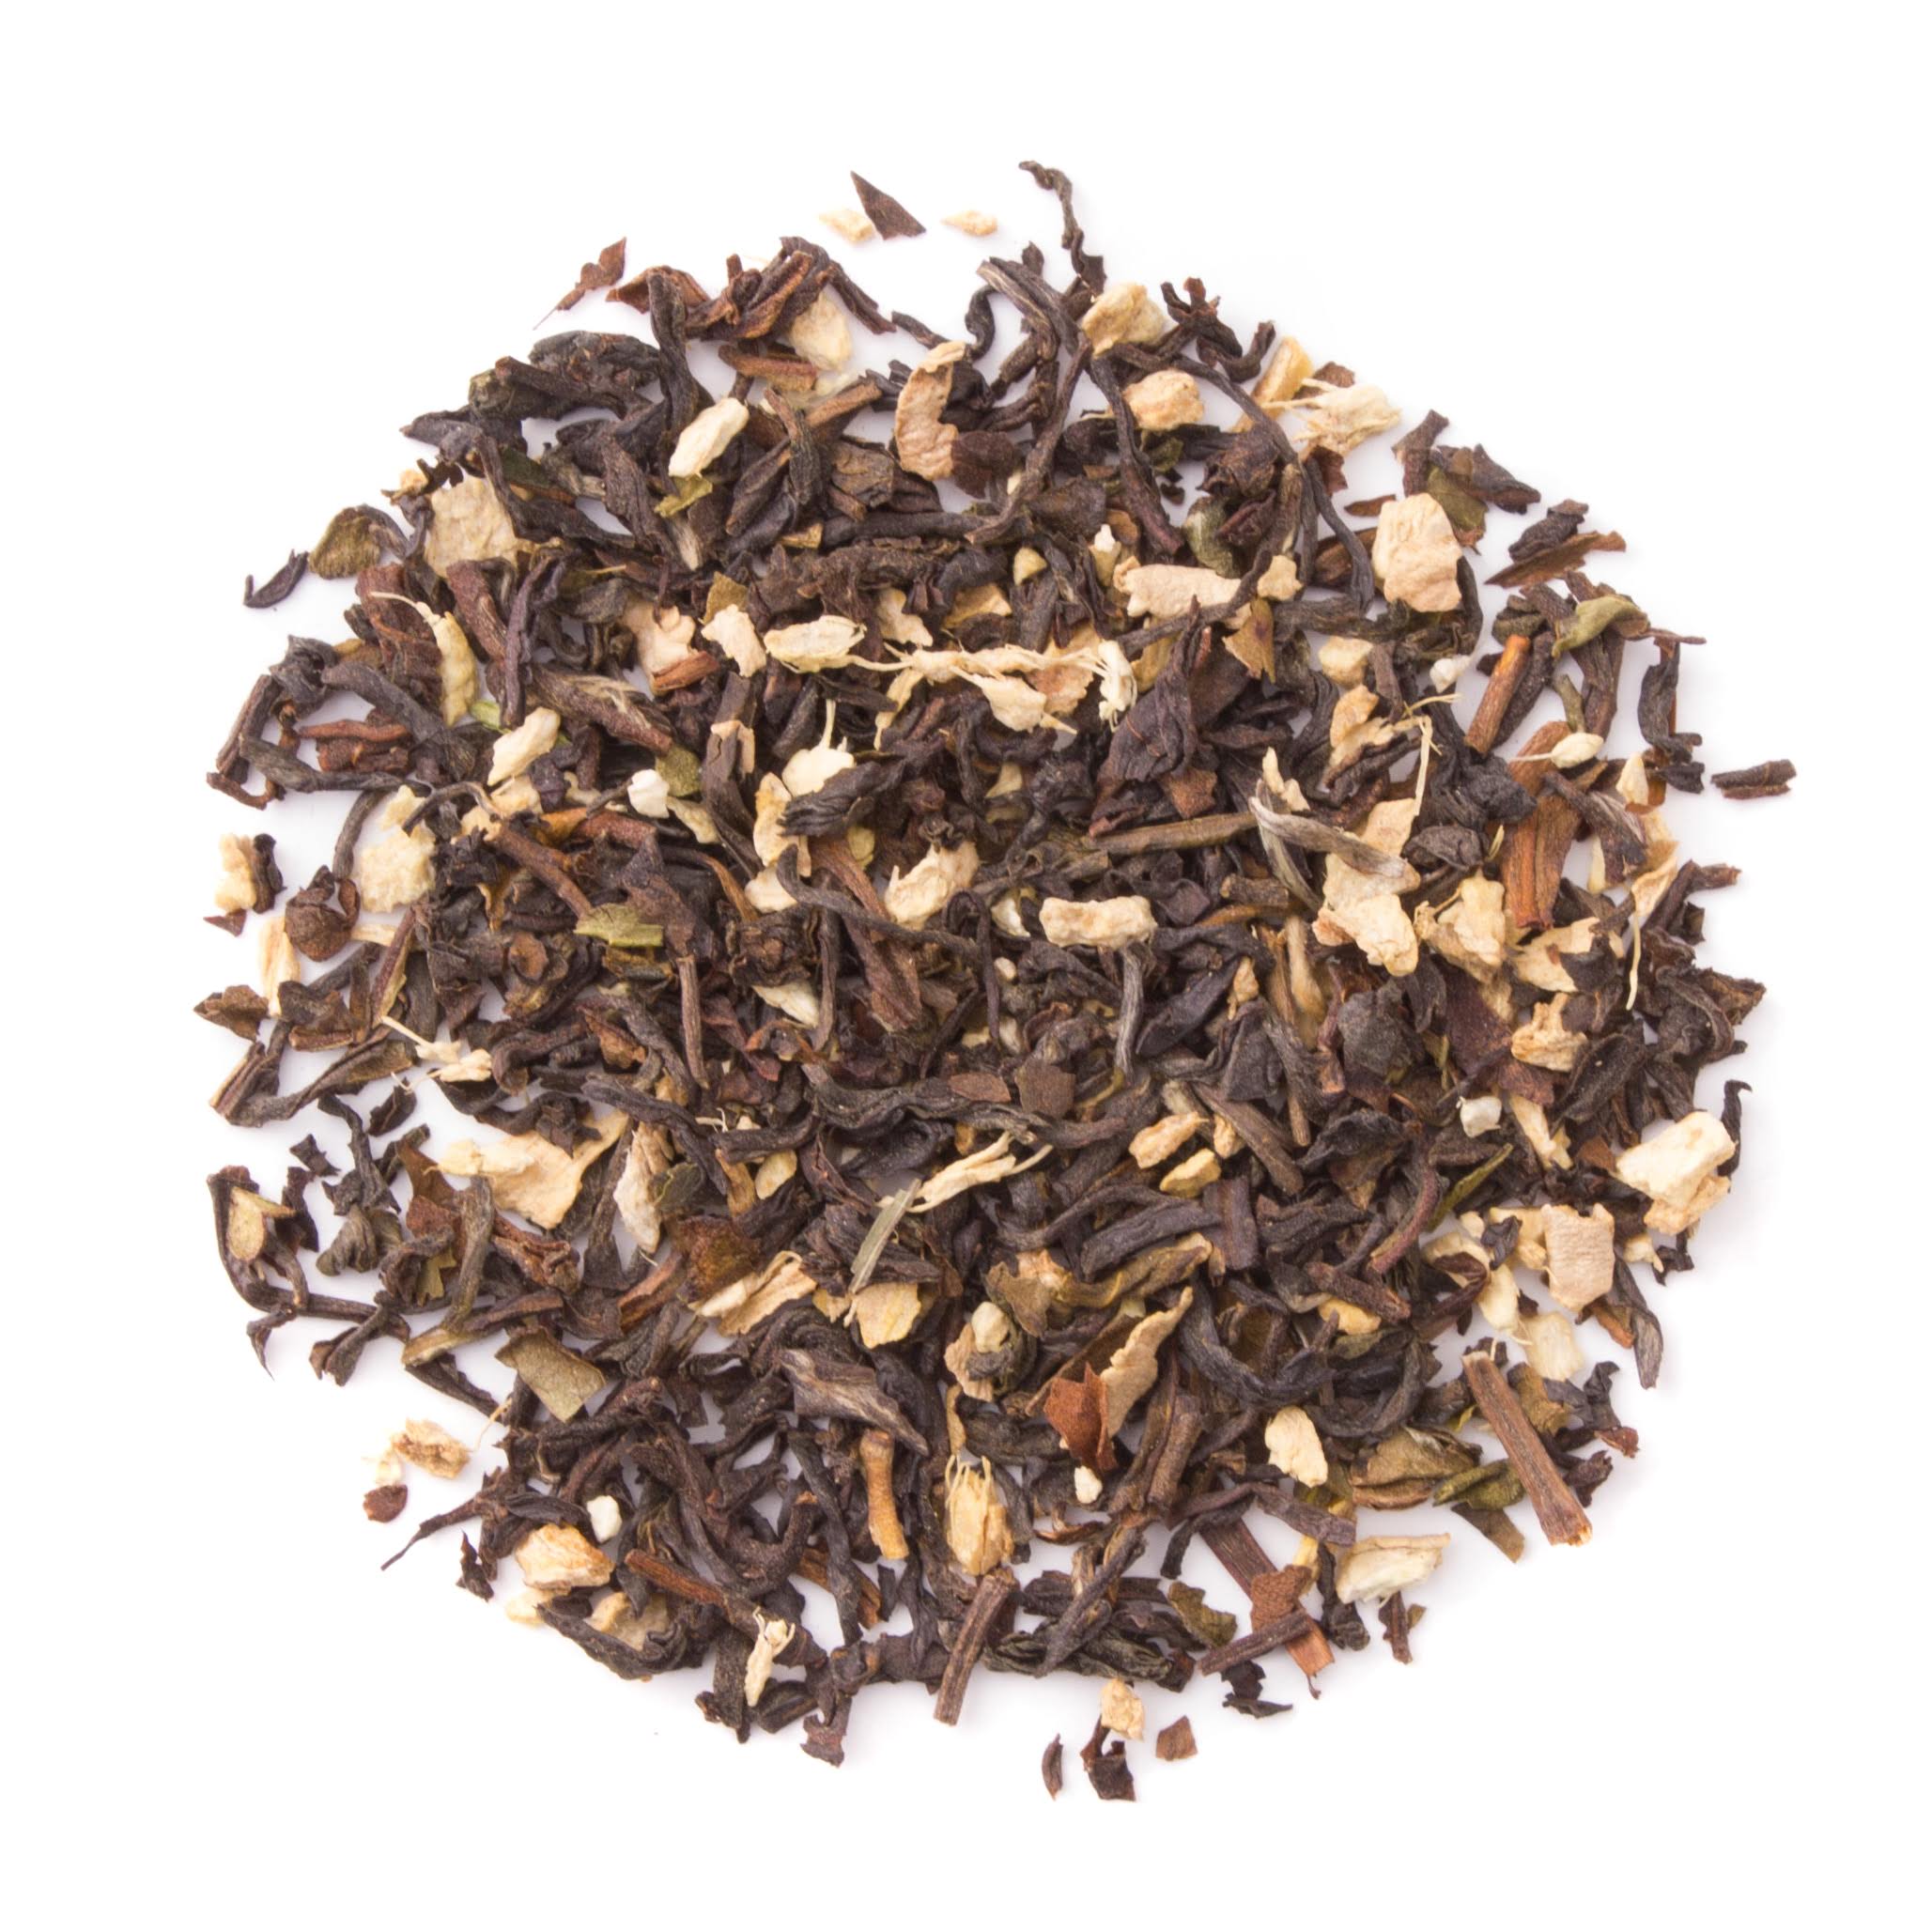 Organic Ginger Black, Bulk Loose Leaf Black Tea, 16 Oz. - Bulk Black Tea - Premium Loose Tea Leaves - Organic & Kosher - Heavenly Tea Leaves